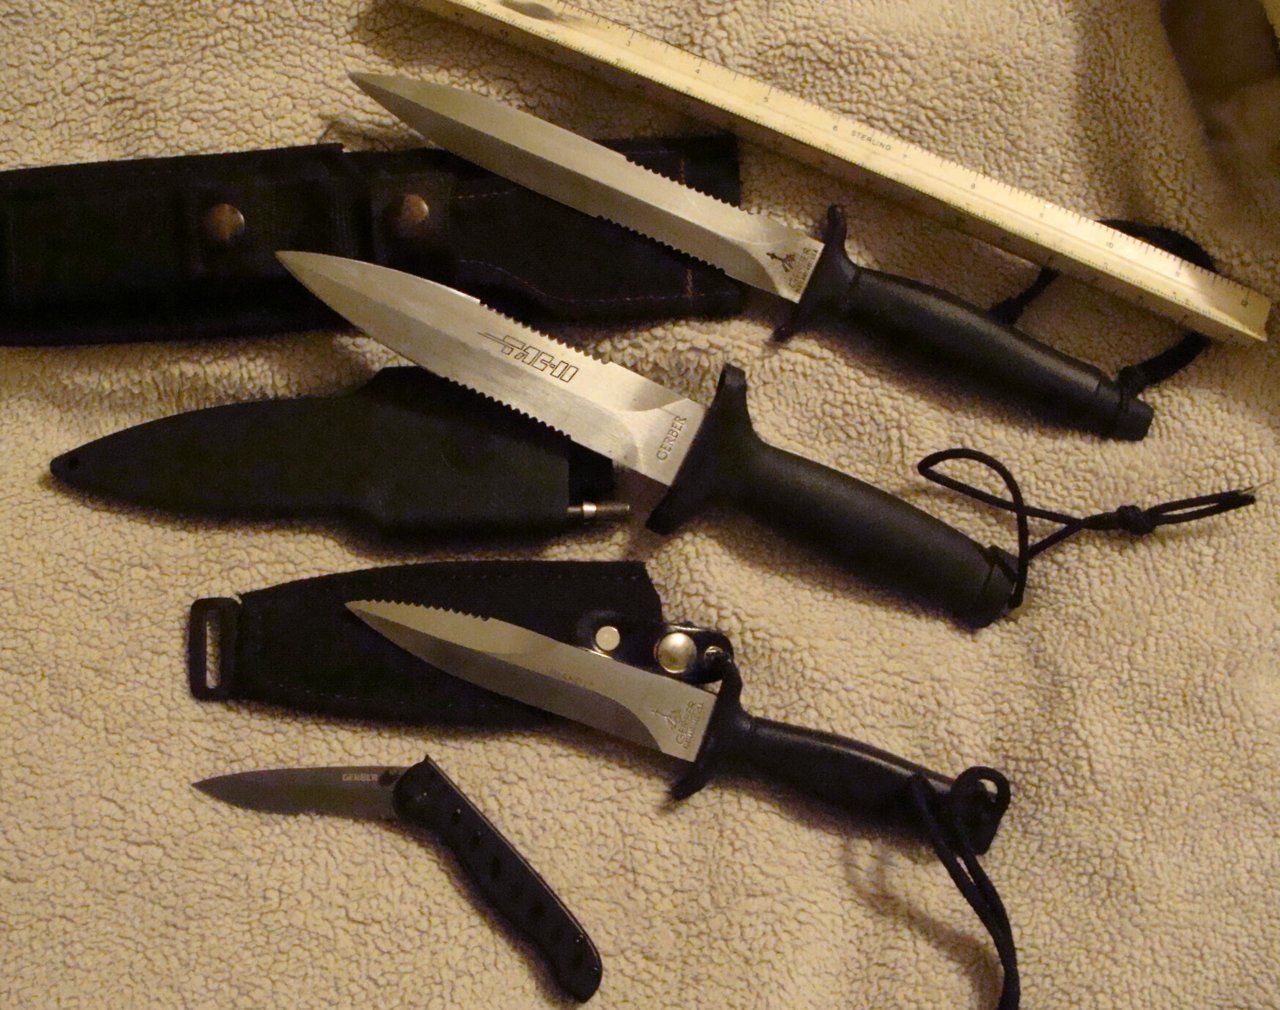 Gerber knives 002 (2).jpg